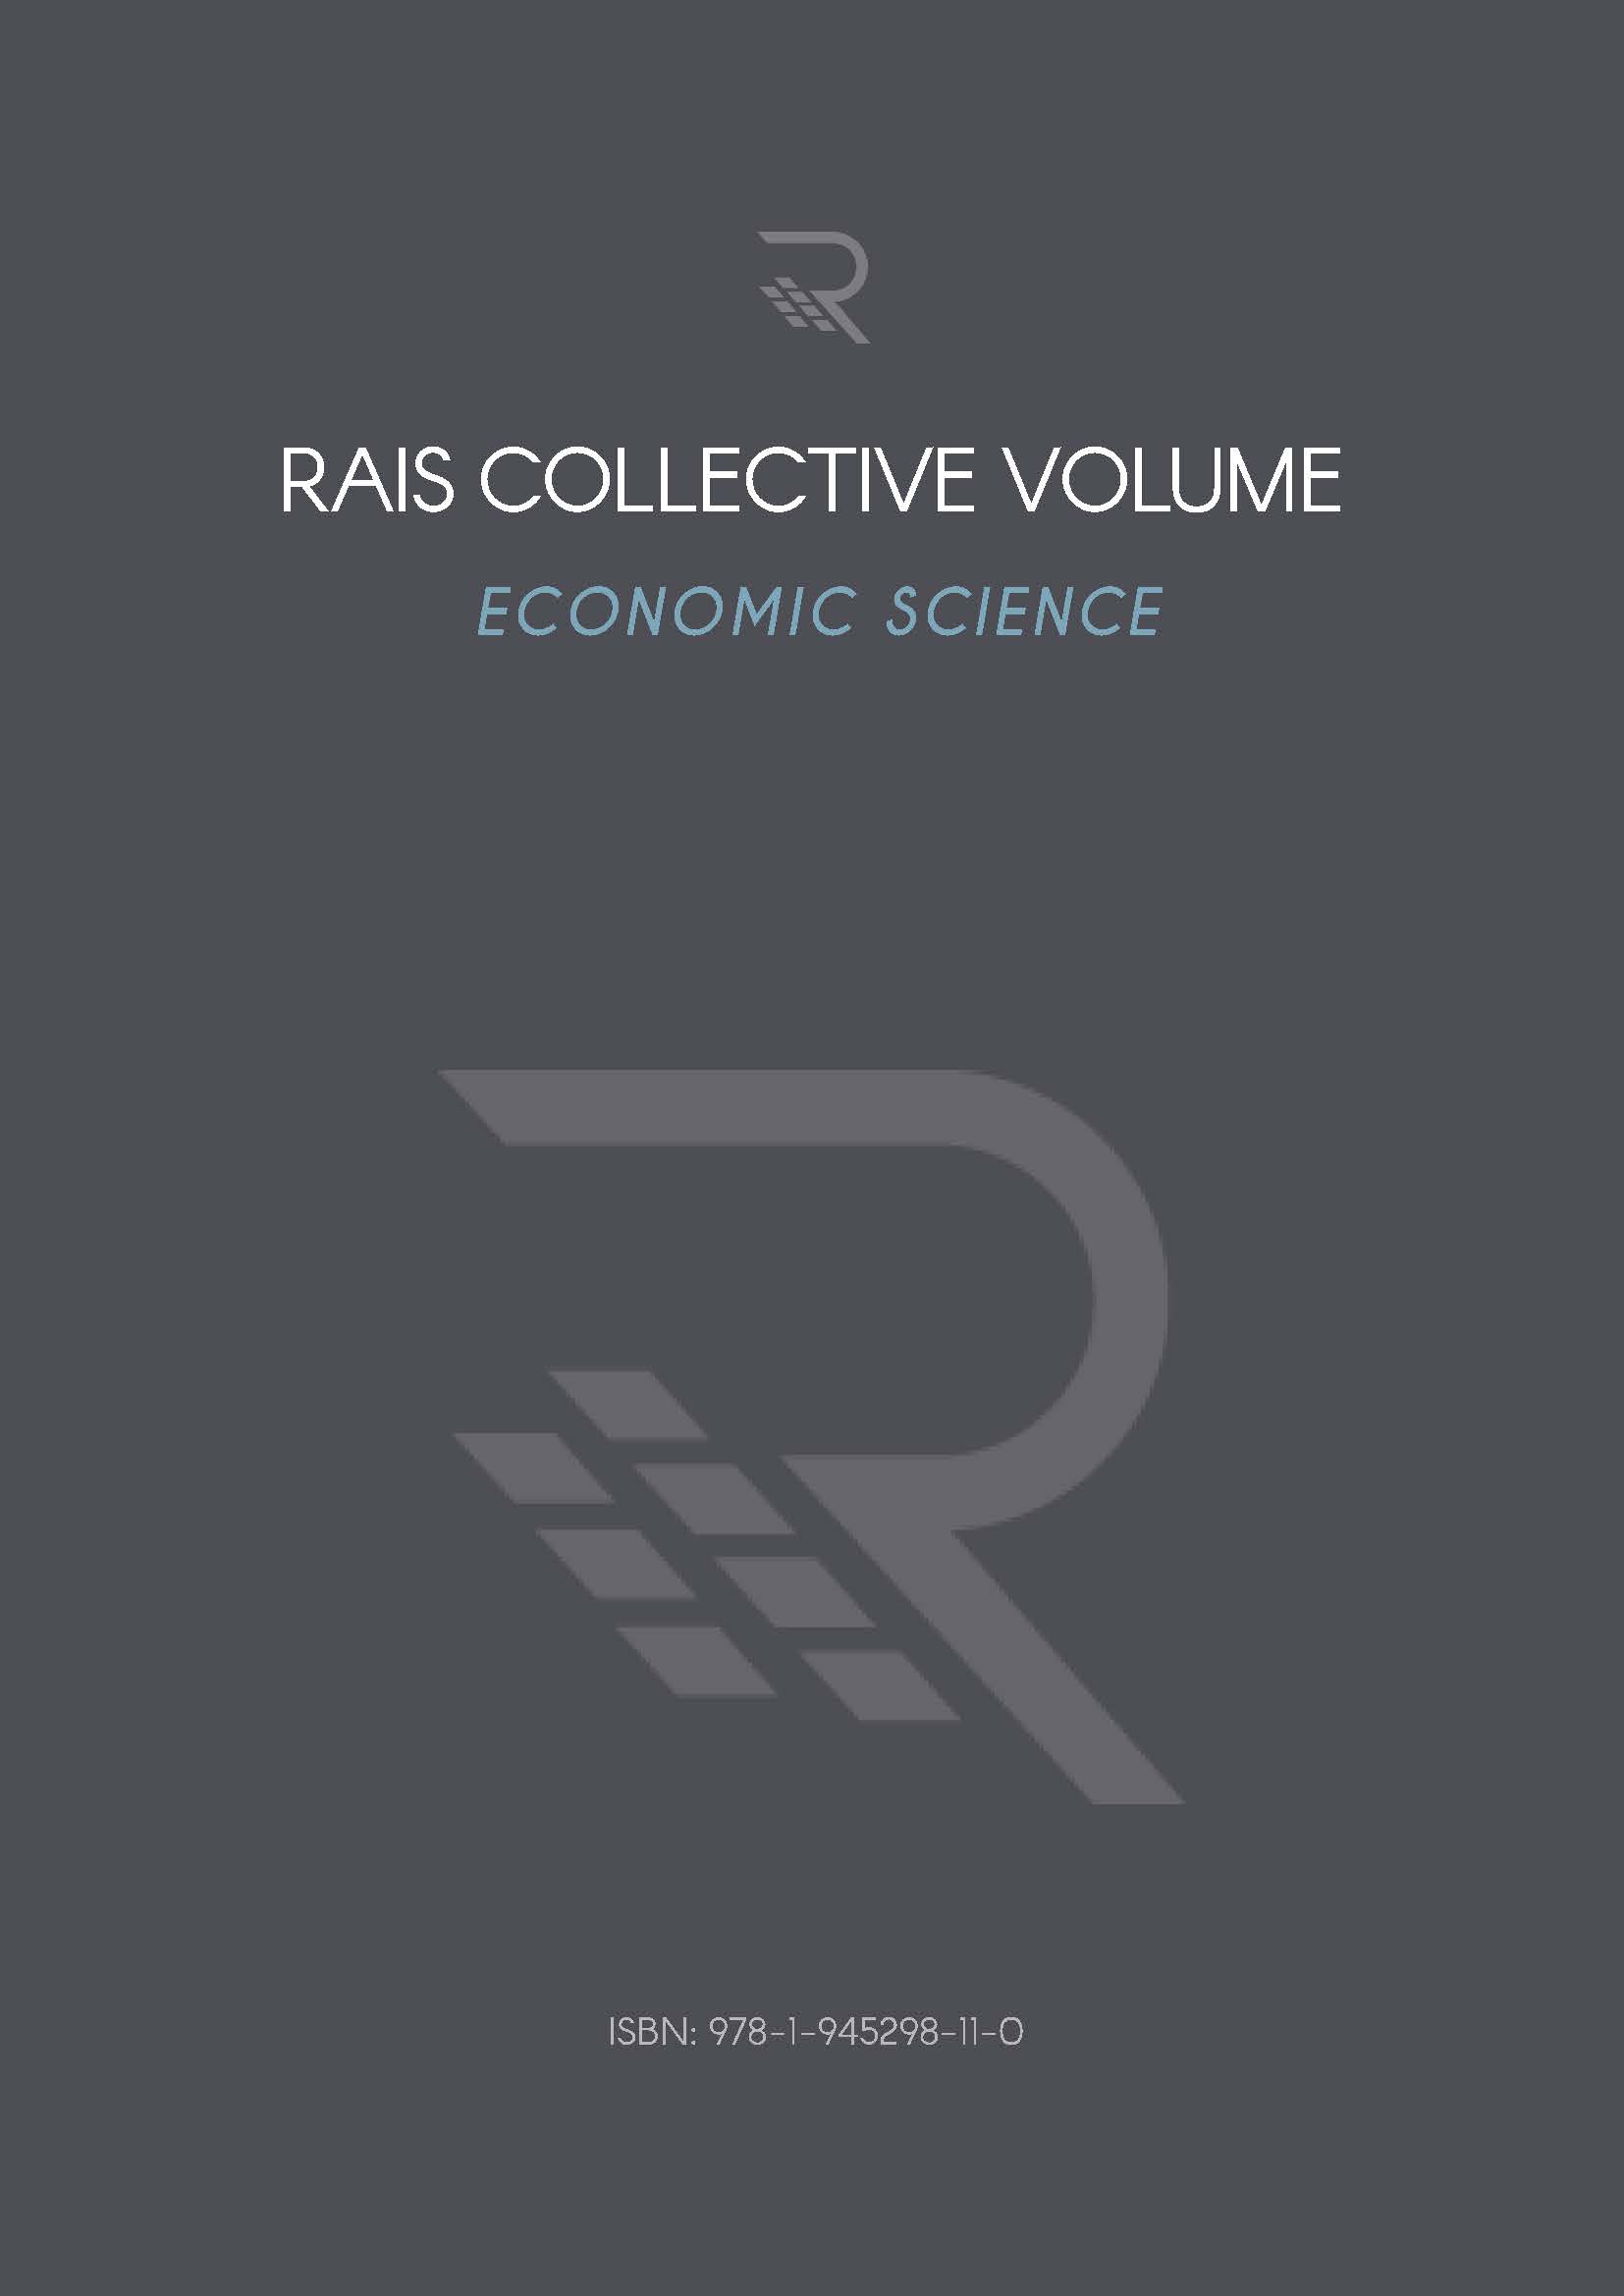 RAIS COLLECTIVE VOLUME – ECONOMIC SCIENCE